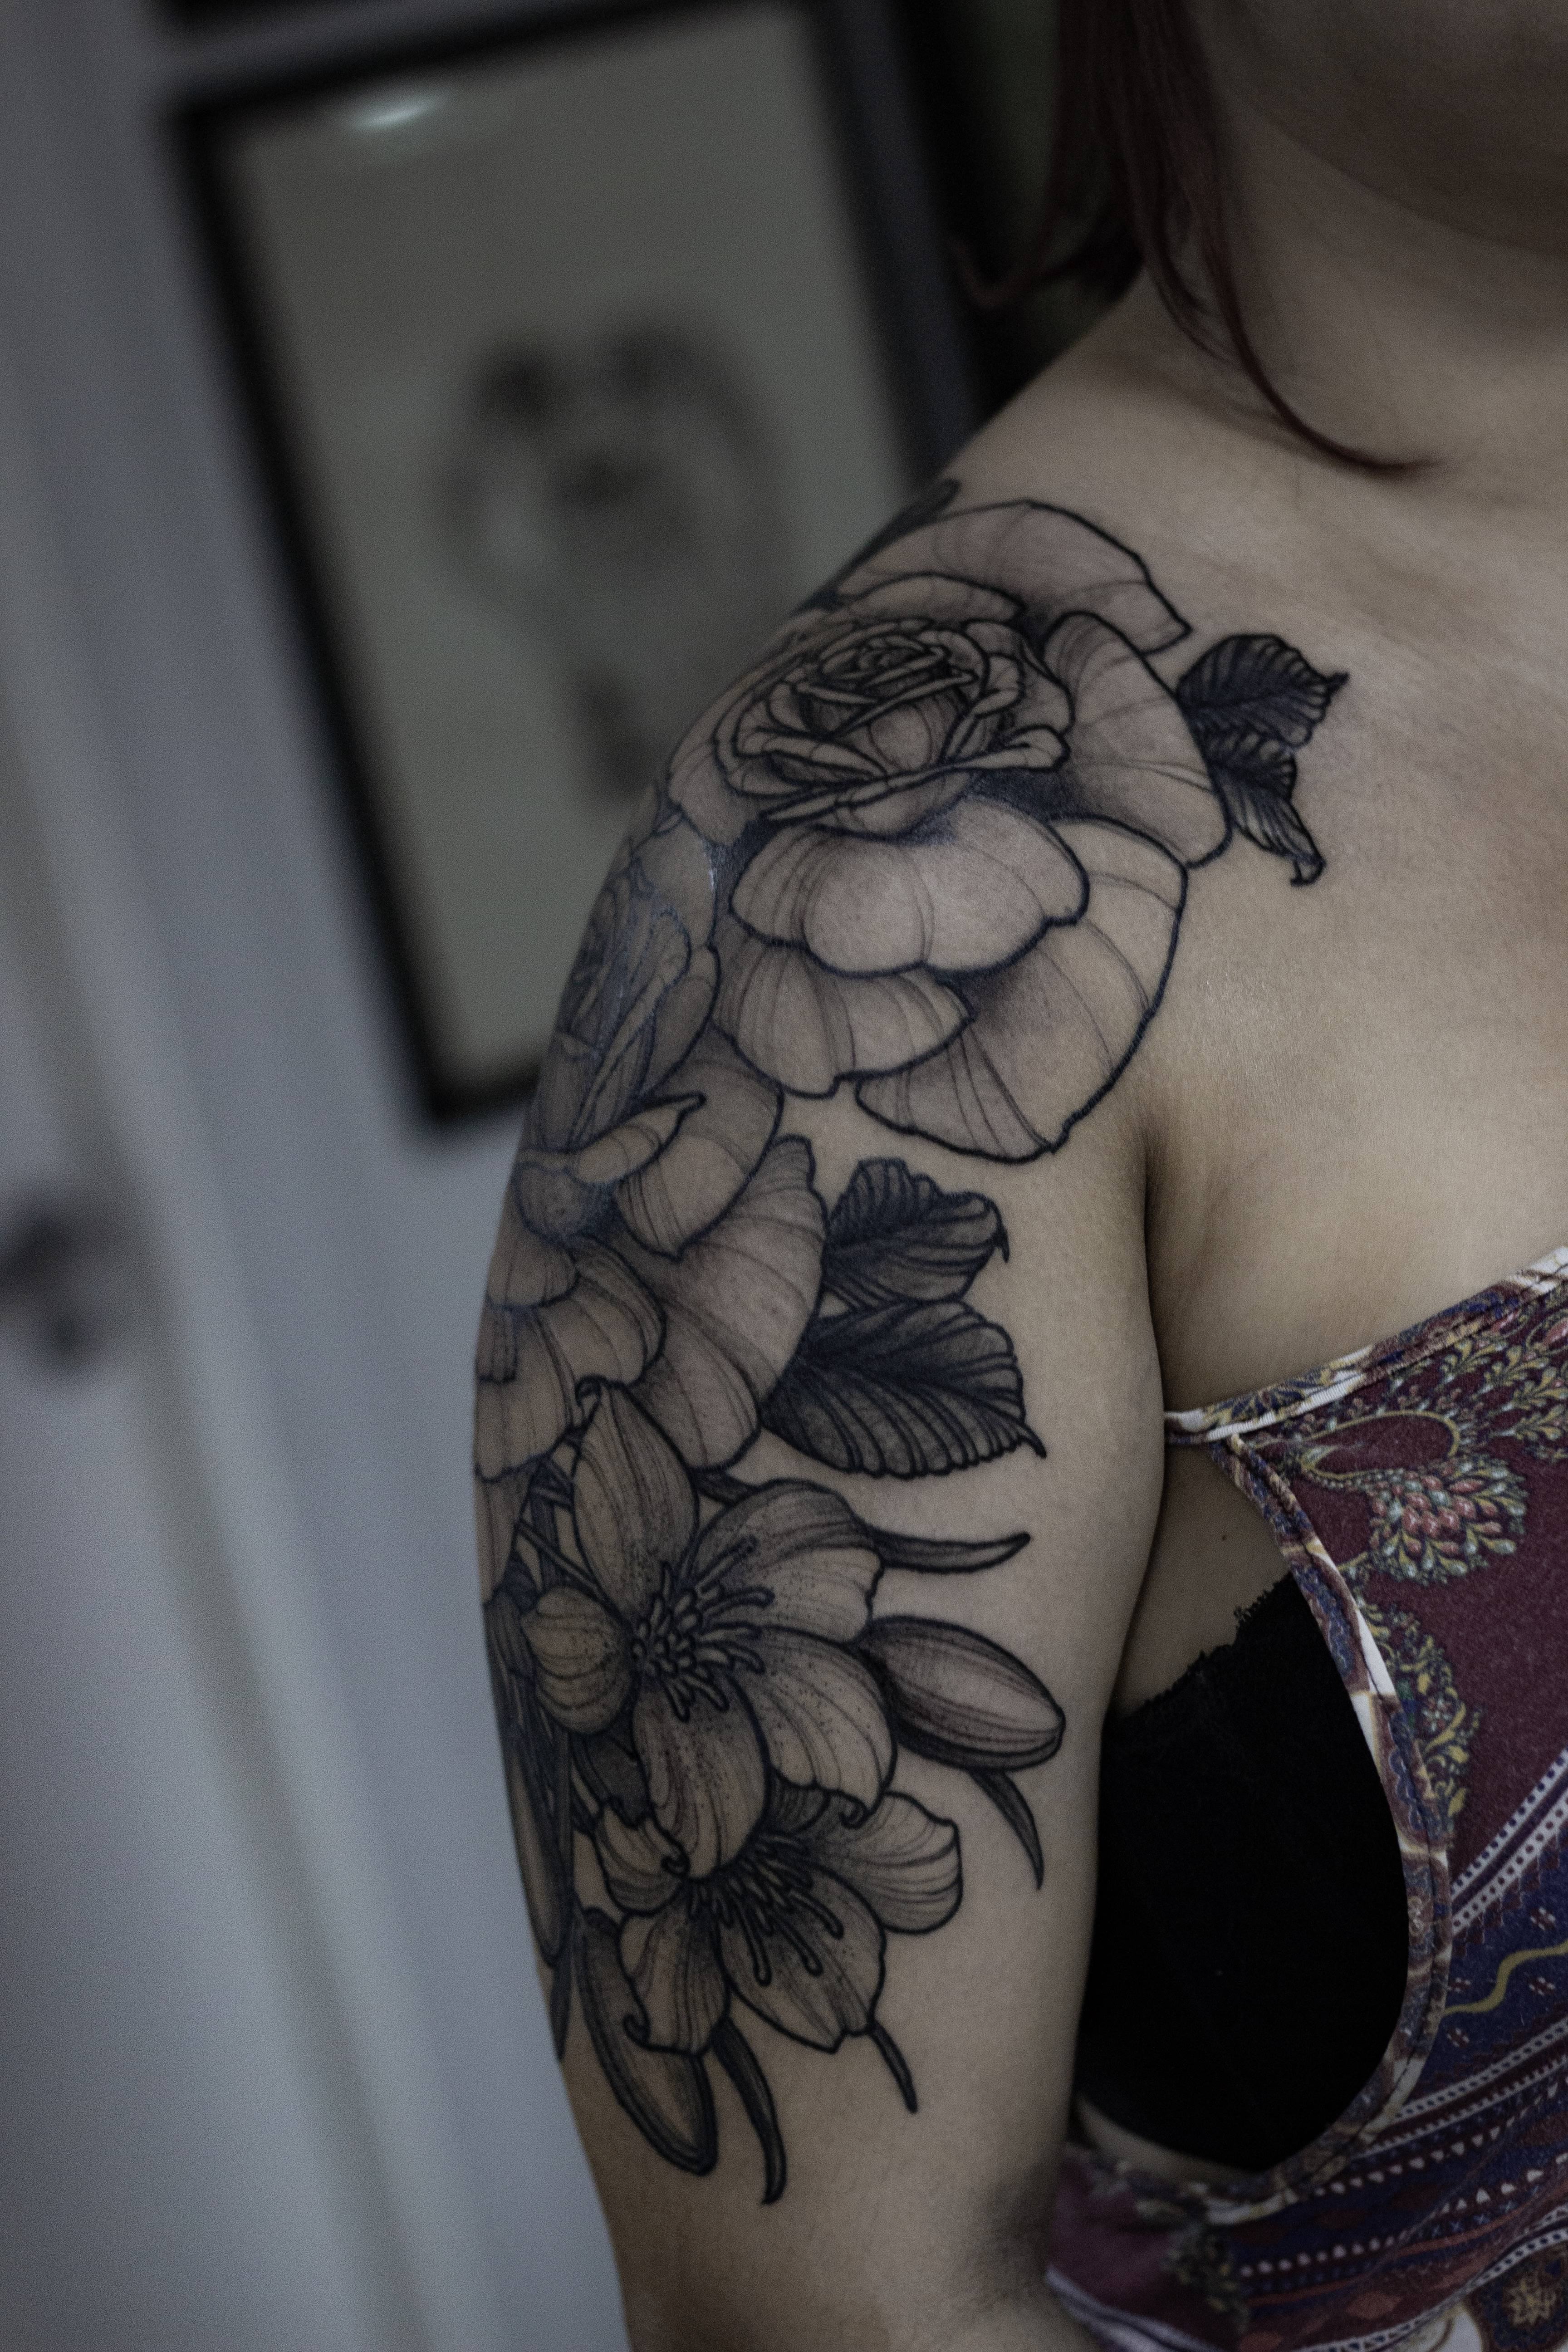 Flower Shoulder Piece Tattoo Album On Imgur inside dimensions 3456 X 5184